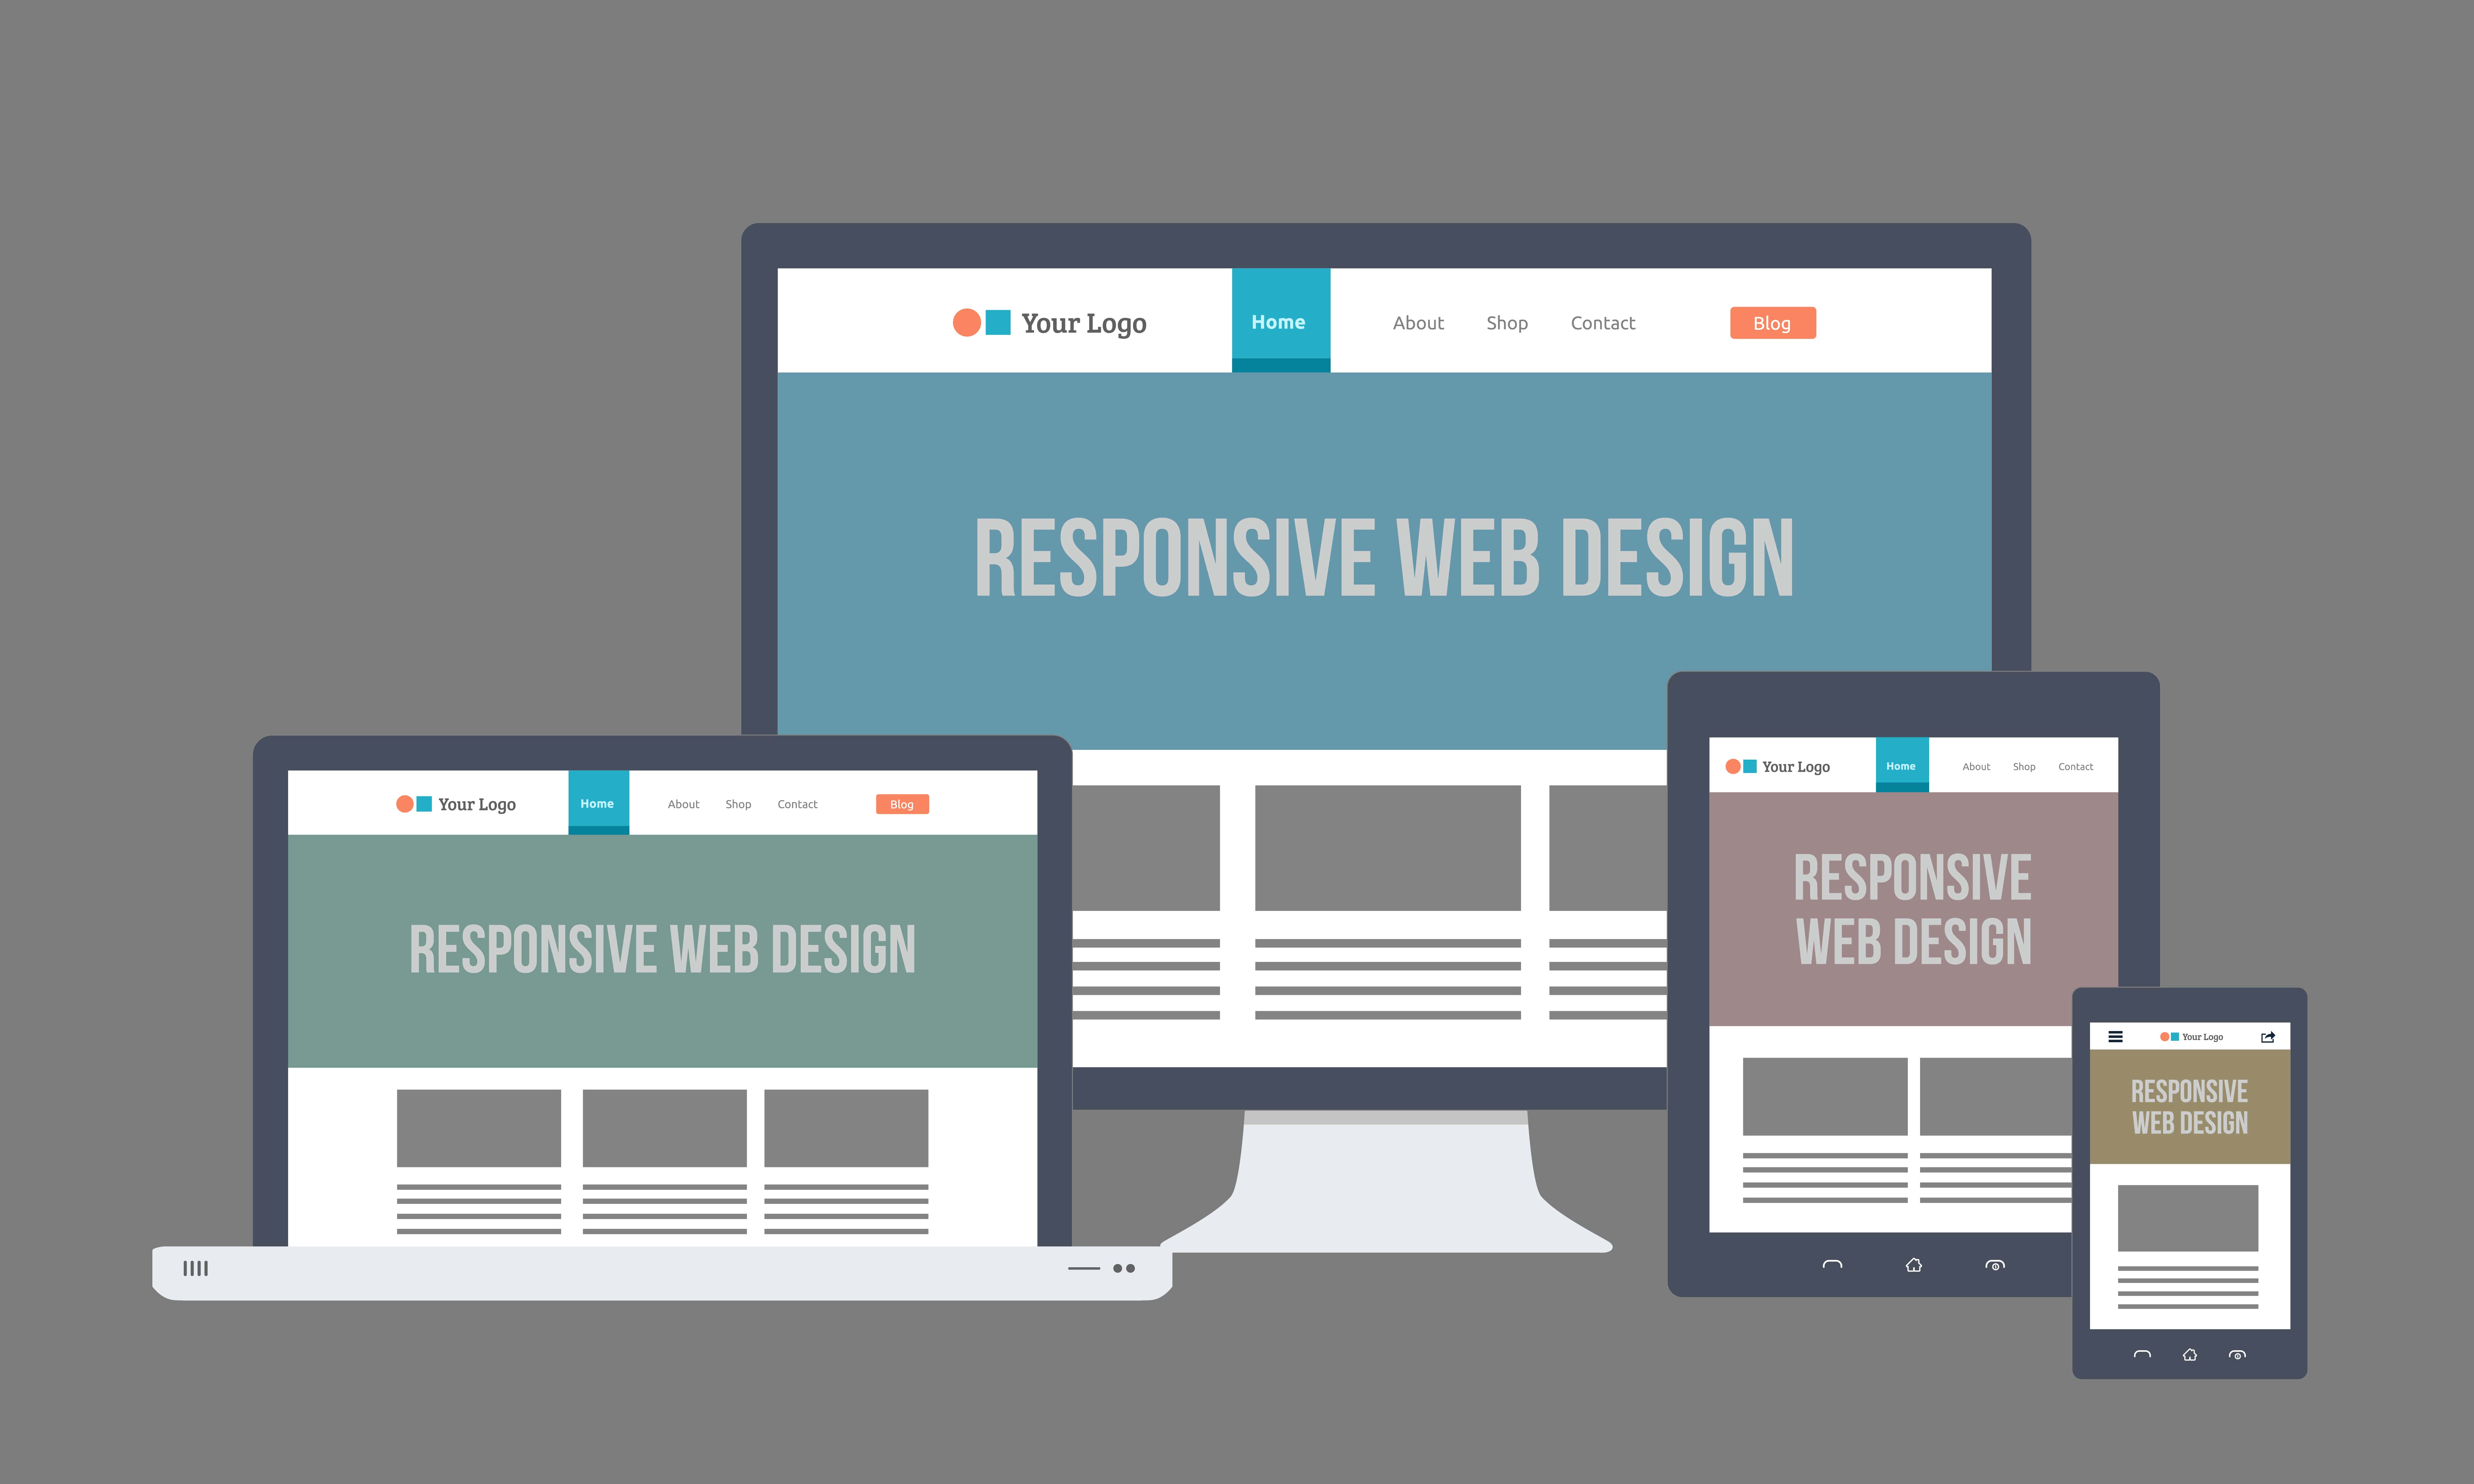 Handy Guideline for Responsive web design